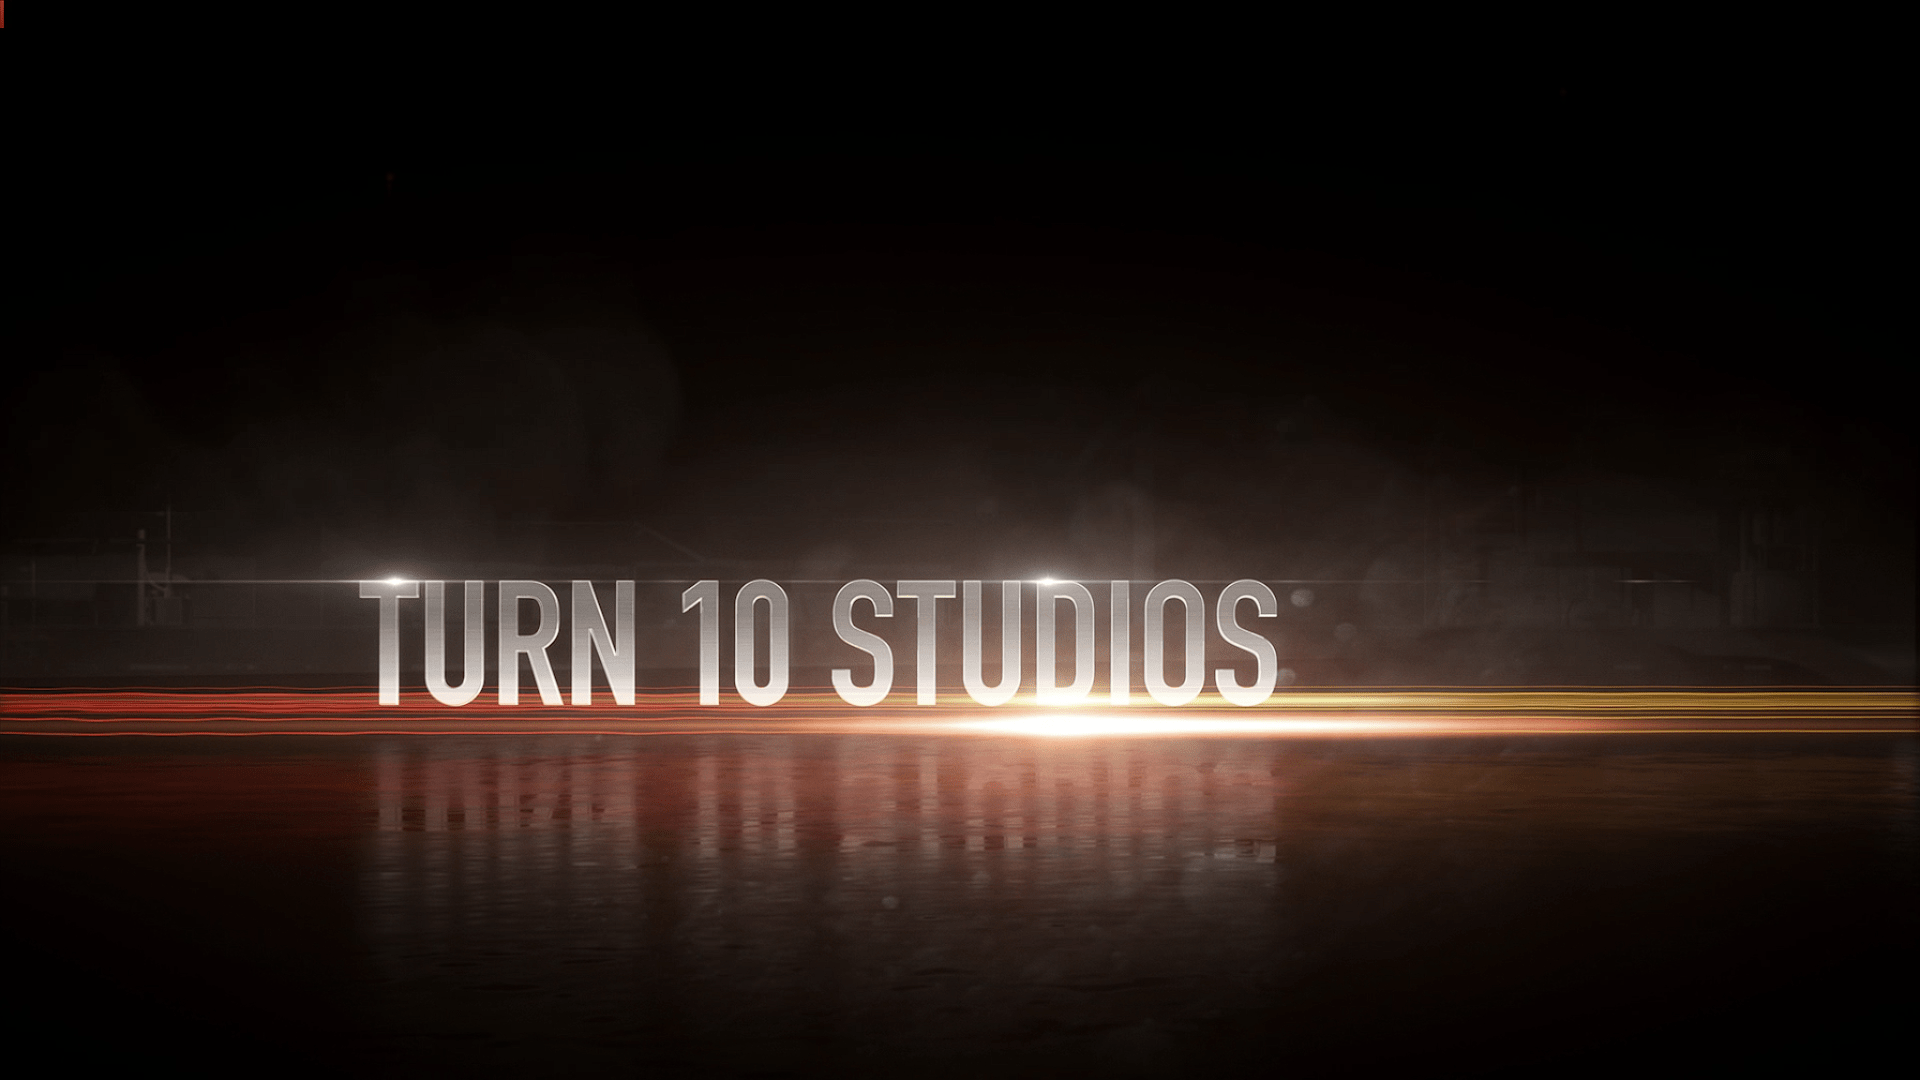 Turn studio. Turn 10 Studios. Заставка после видео. До после заставка. Turn 10 Studios без фона.